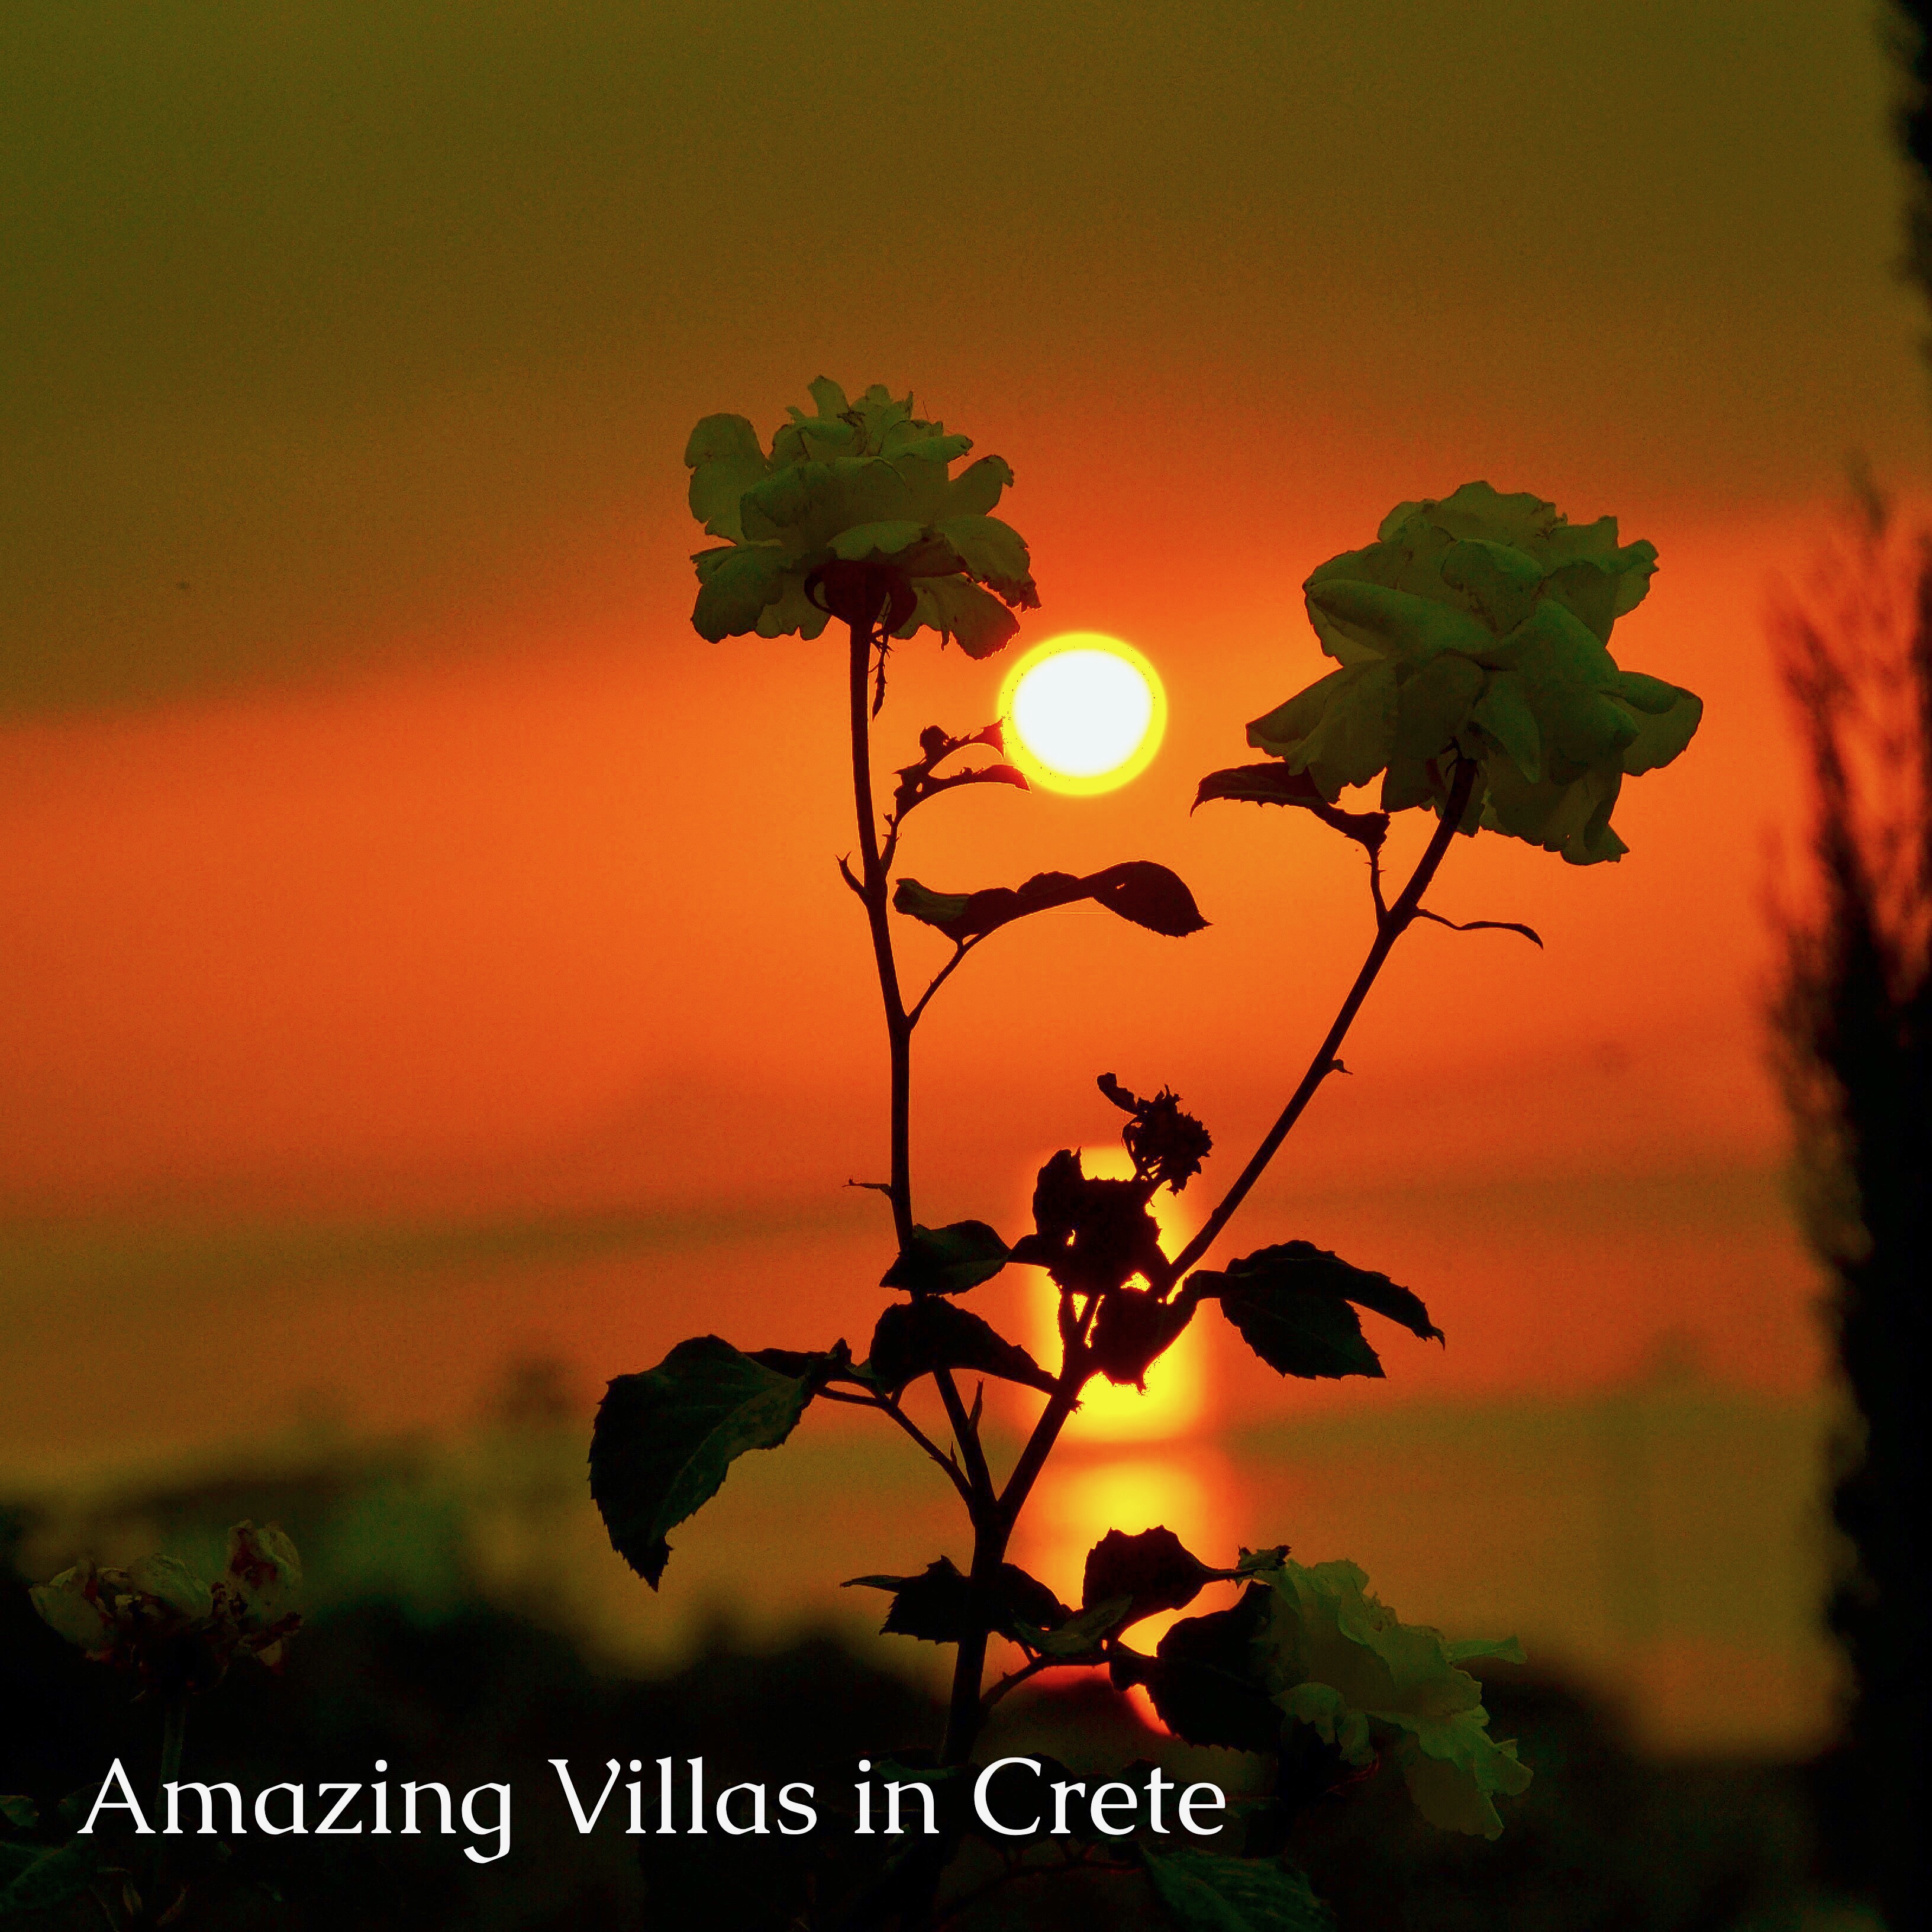 Amazing Villas in Crete - Sunset from our garden